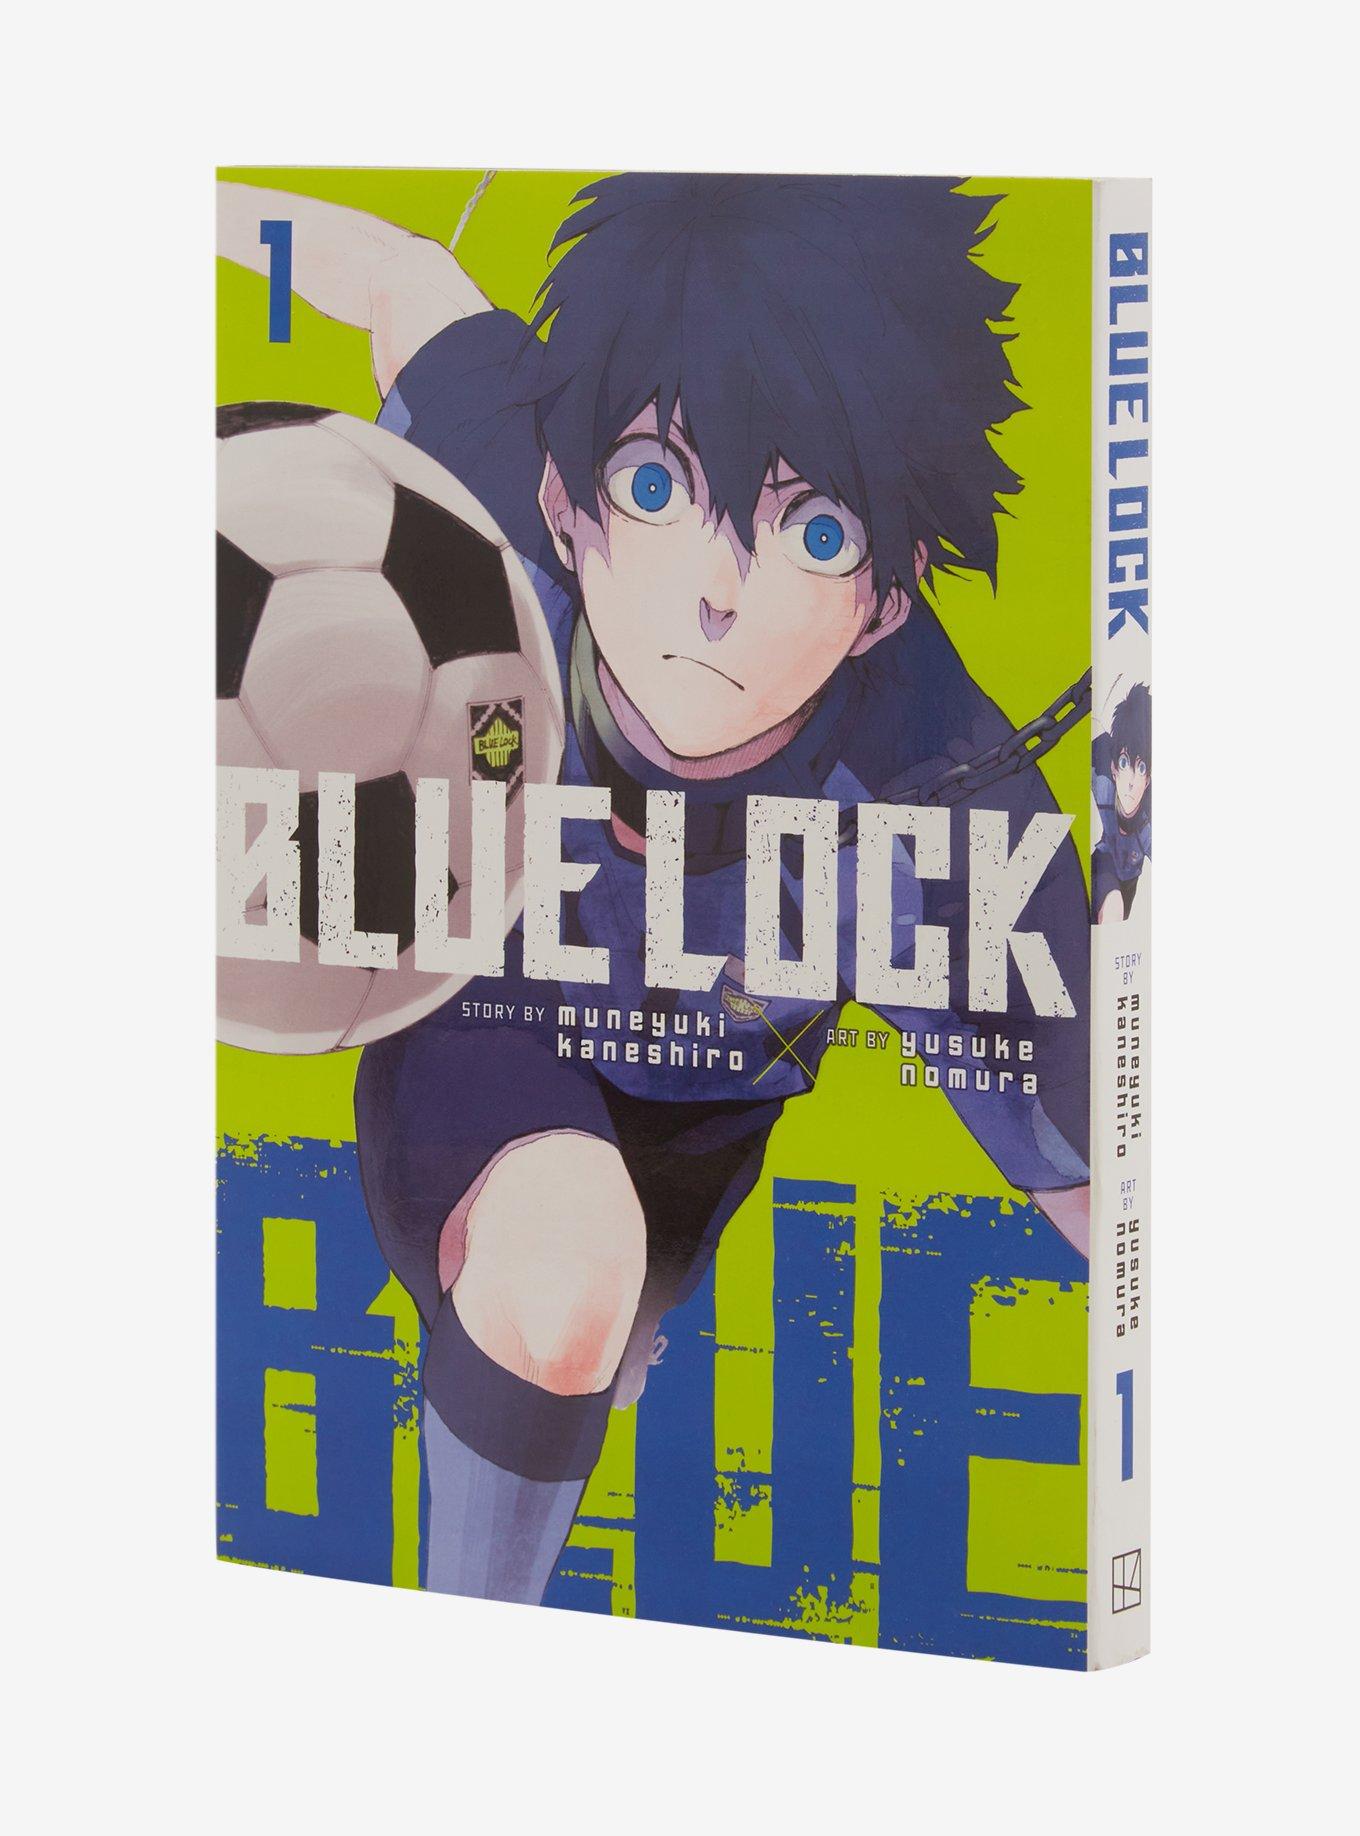 Blue Lock 1